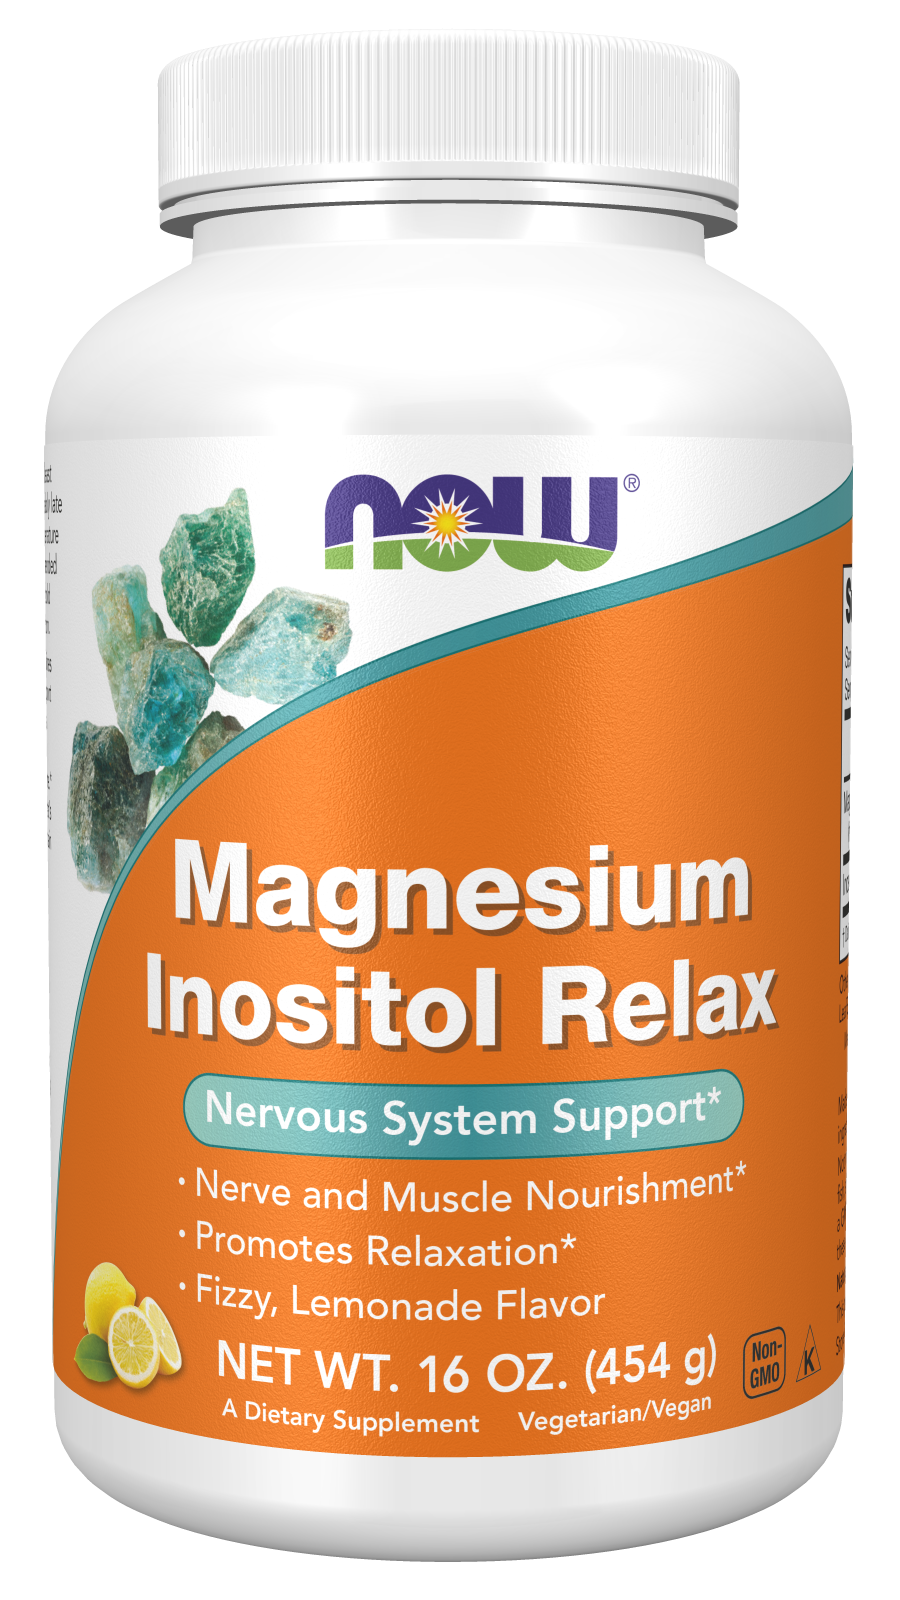 Magnesium Inositol Relax Powder - 16 oz. Bottle Front